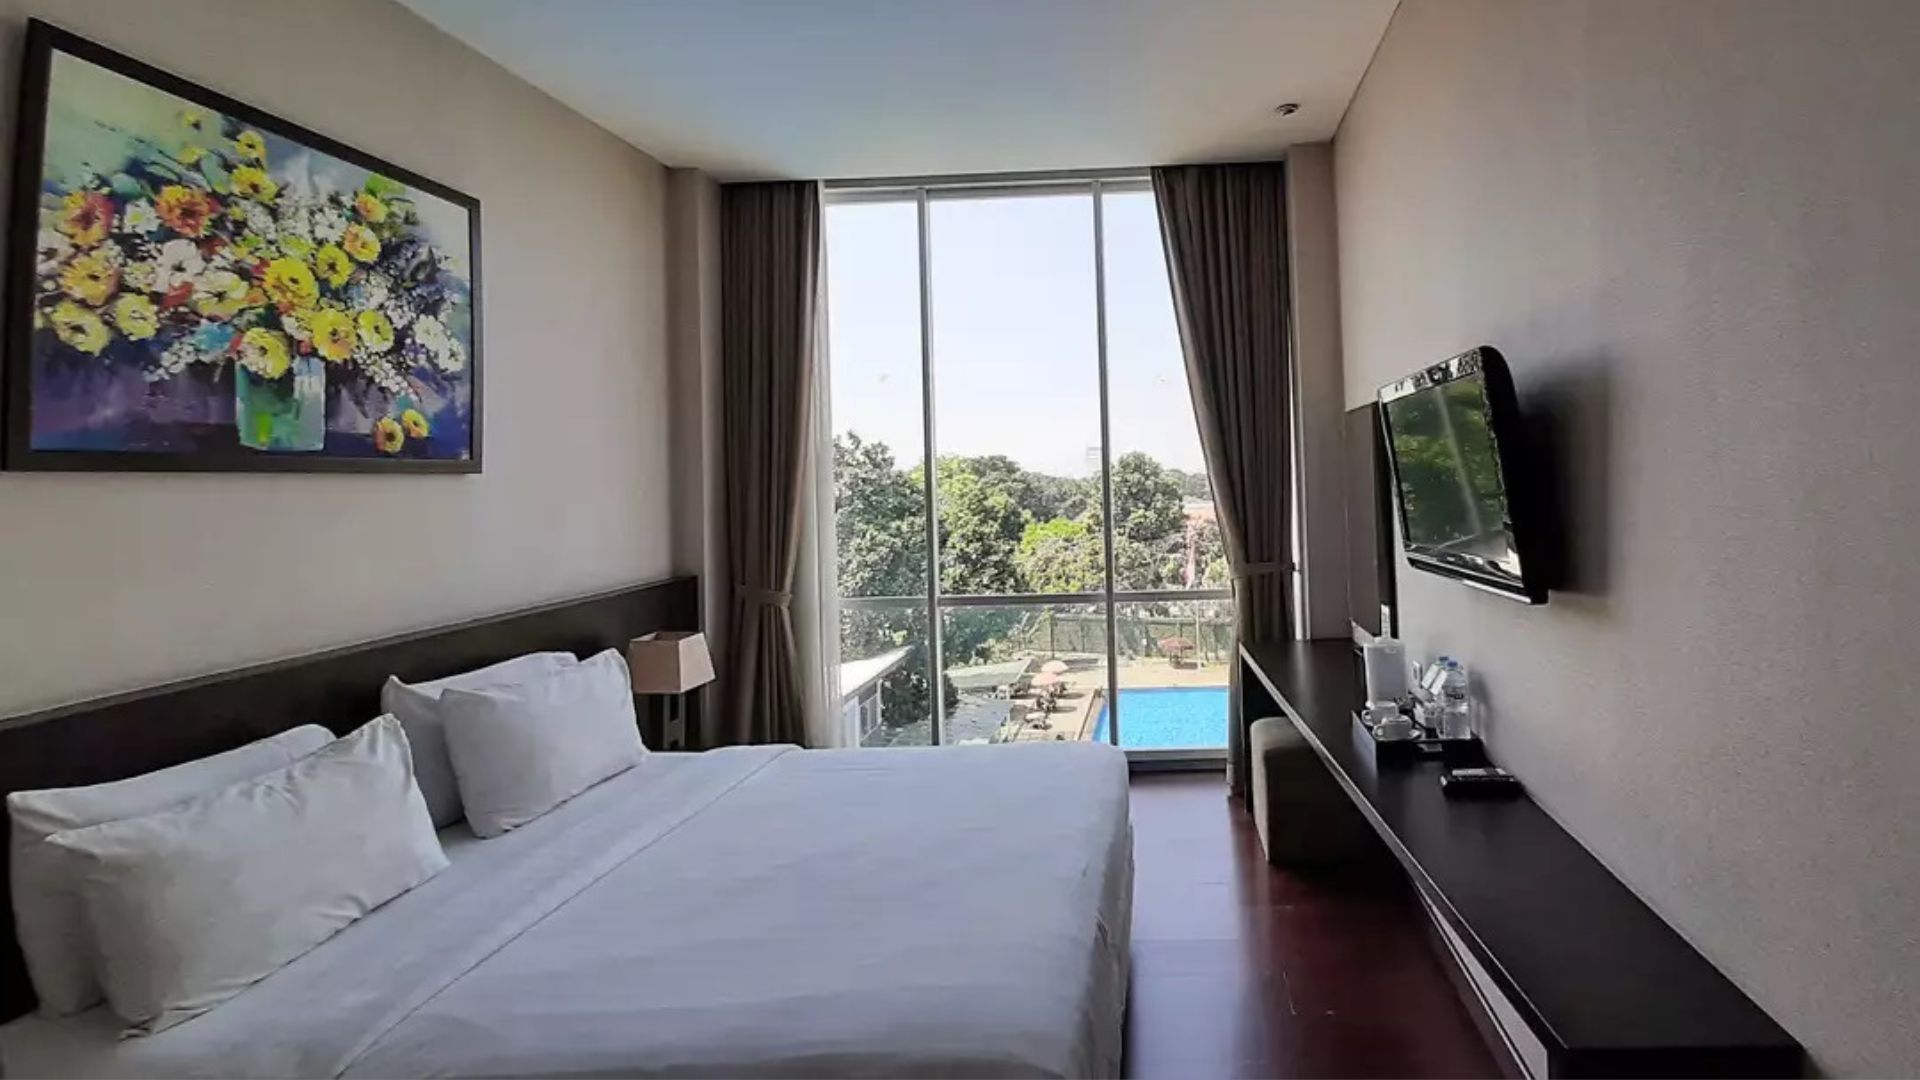 Kamar hotel Pool View Oasis Siliwangi Bandung, Cek harga dan alamatnya di sini./ Instagram/ oasissiliwangihotel